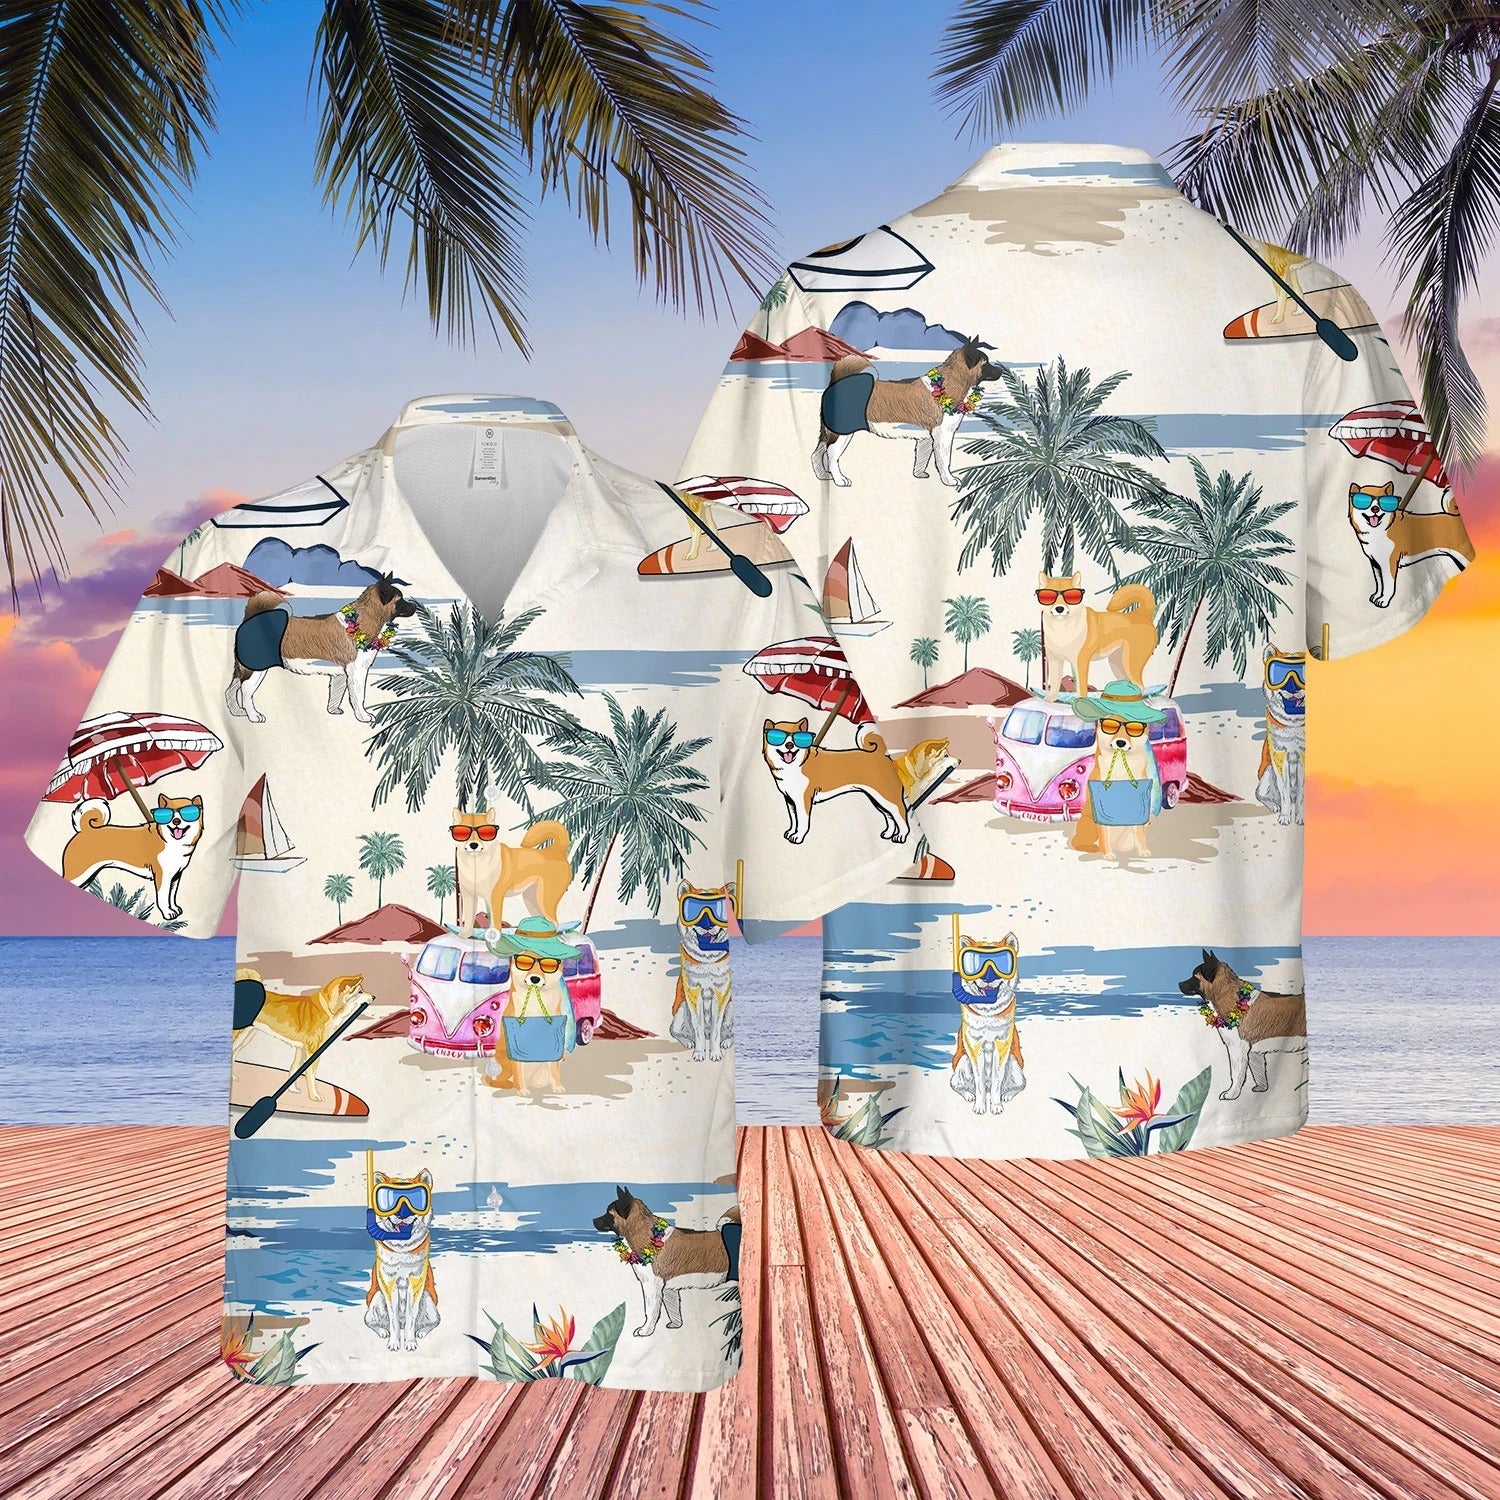 Akita Summer Beach Hawaiian Shirt/ Short Sleeve Dog Aloha Shirt For Summer